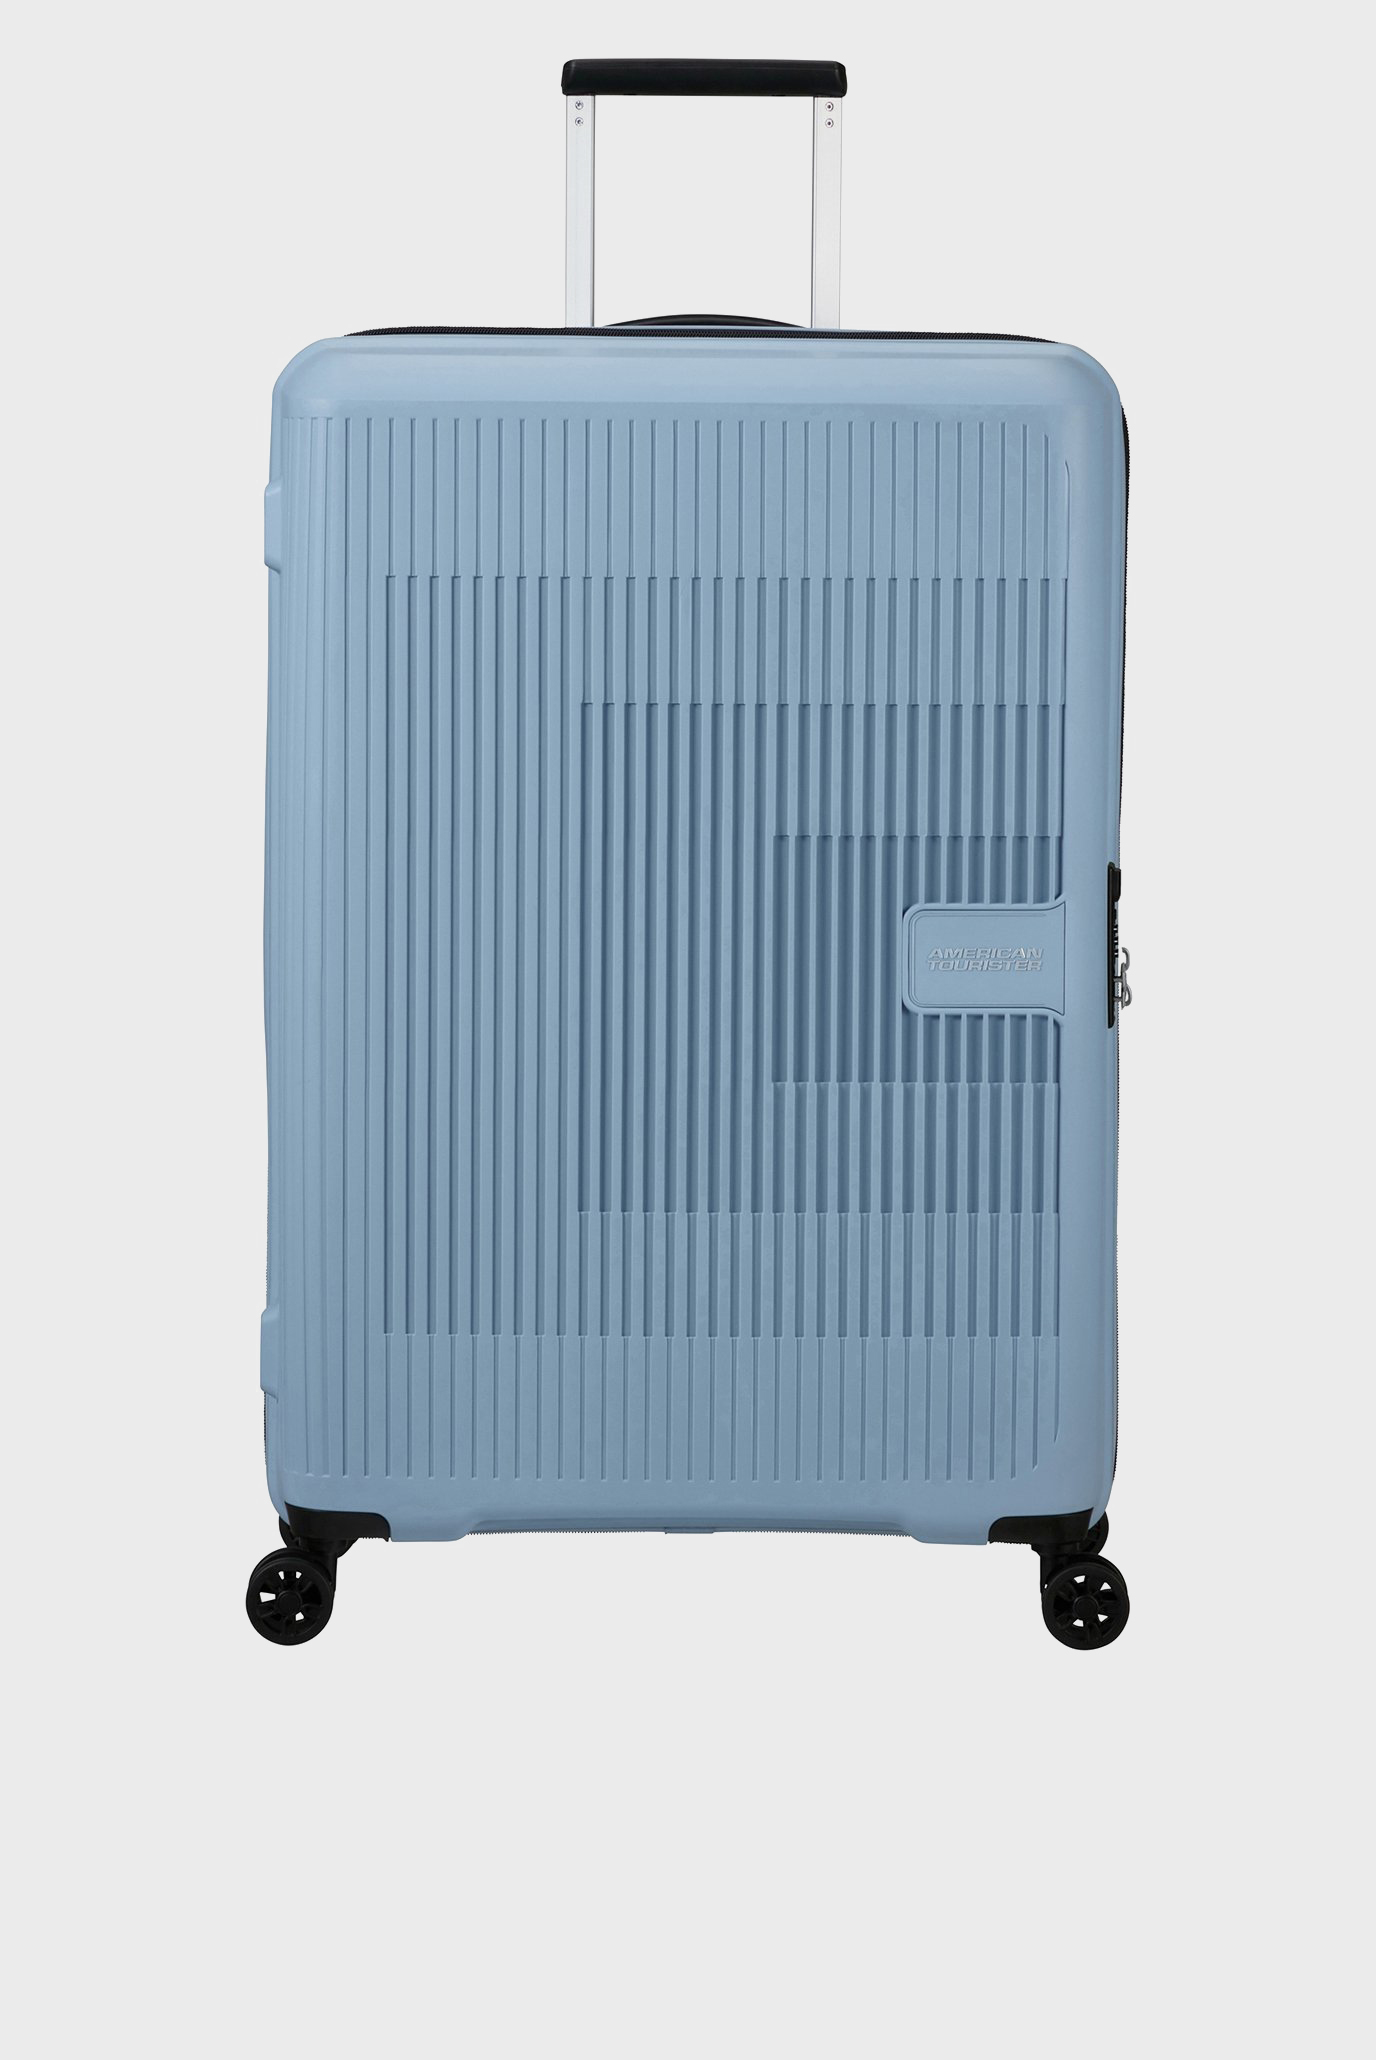 Голубой чемодан 77 см AEROSTEP GREY 1